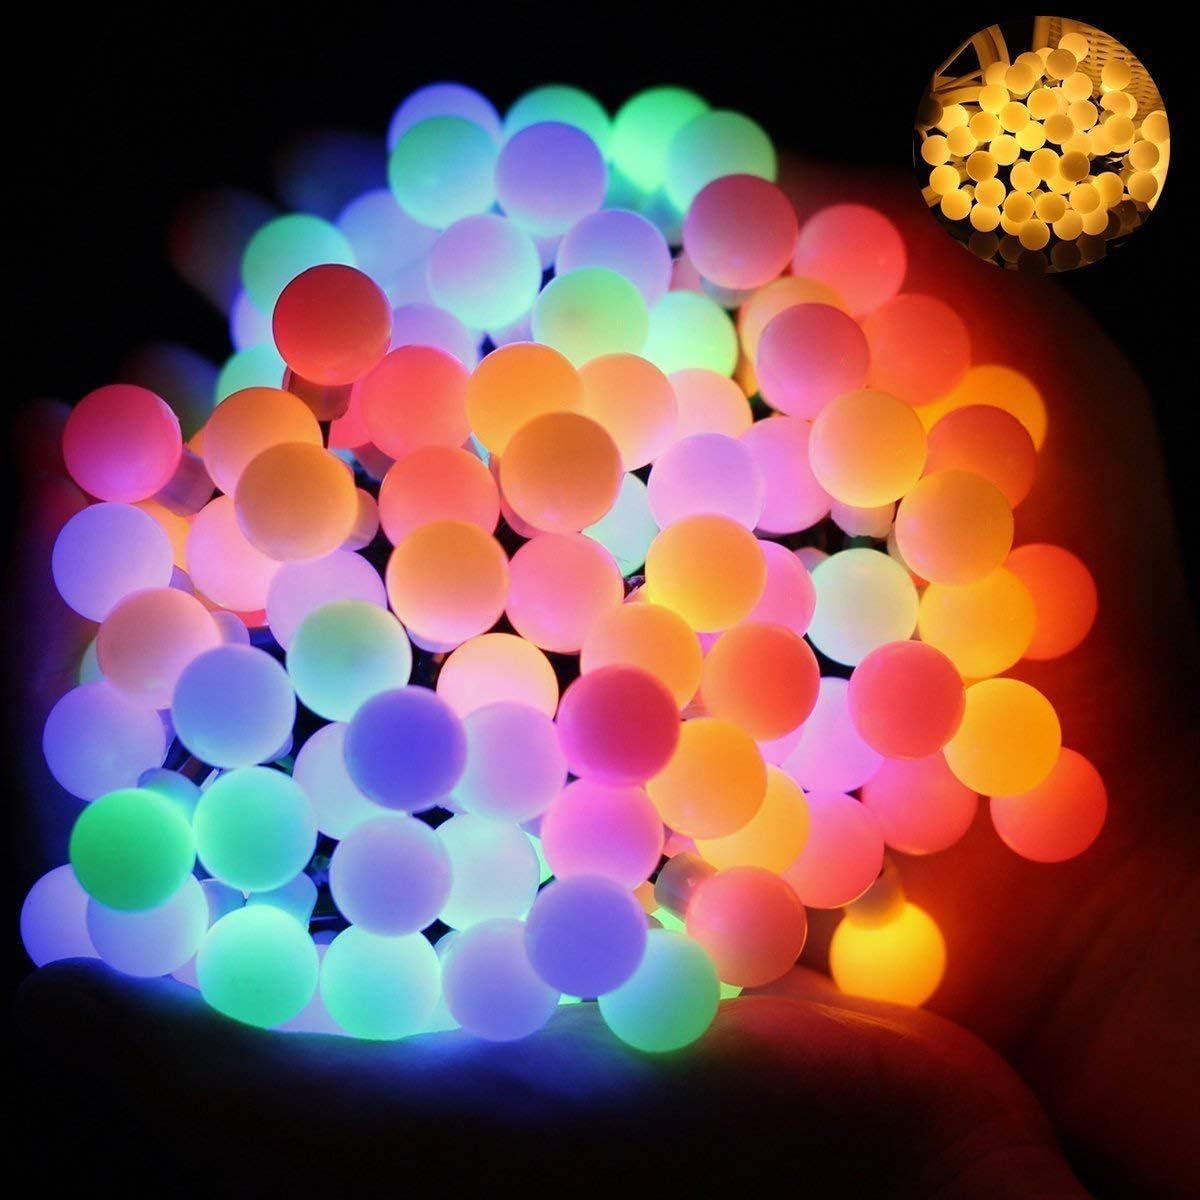 Jormftte LED-Lichterkette Mehrfarbige 10M 100 Party Beleuchtungsmodi,für LEDs Lichterketten,8